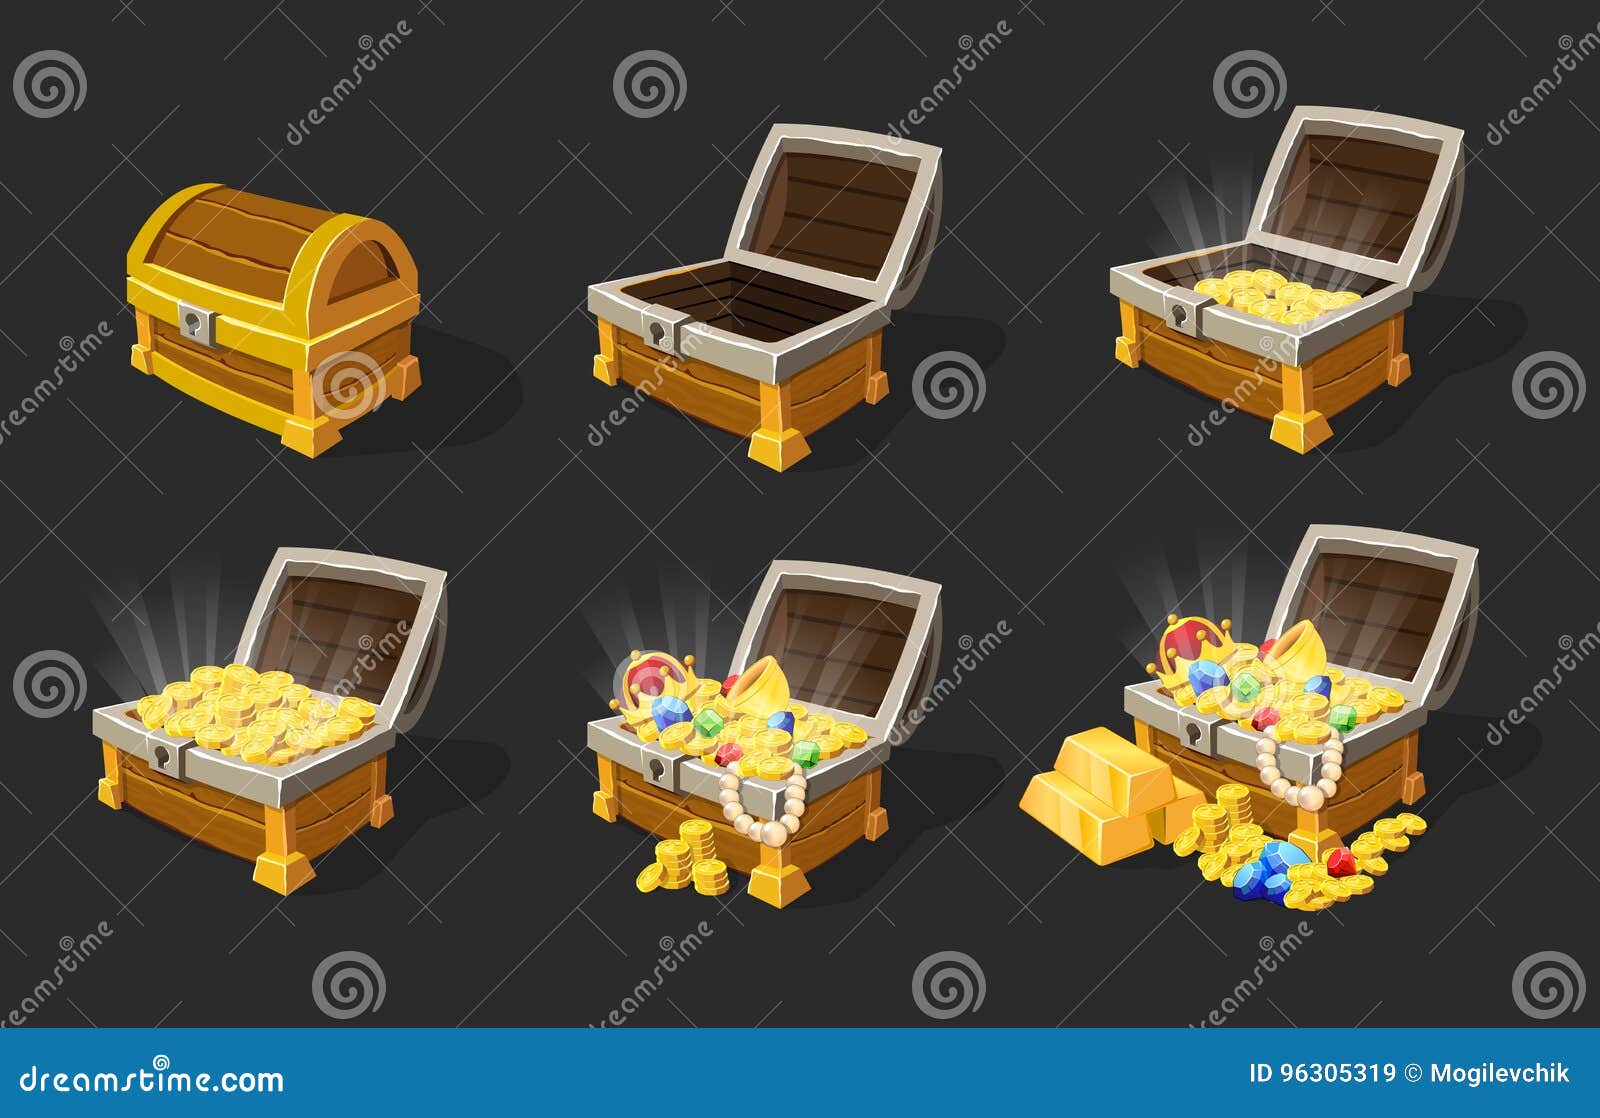 isometric treasure chests animation set